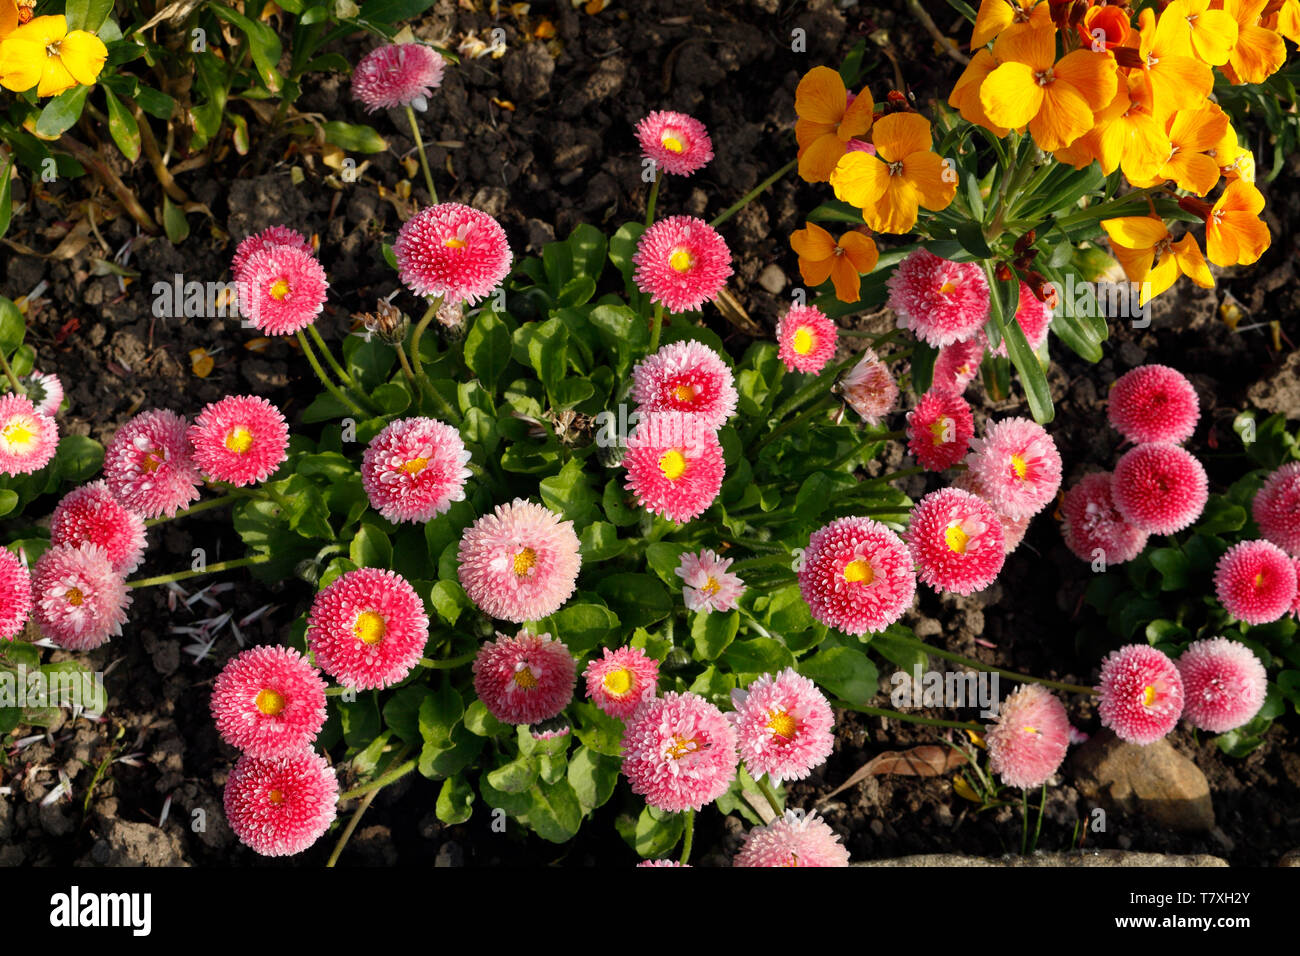 Bellis Perrenis, double flowered daisy. Pomponette, spring bedding plants flowers Stock Photo